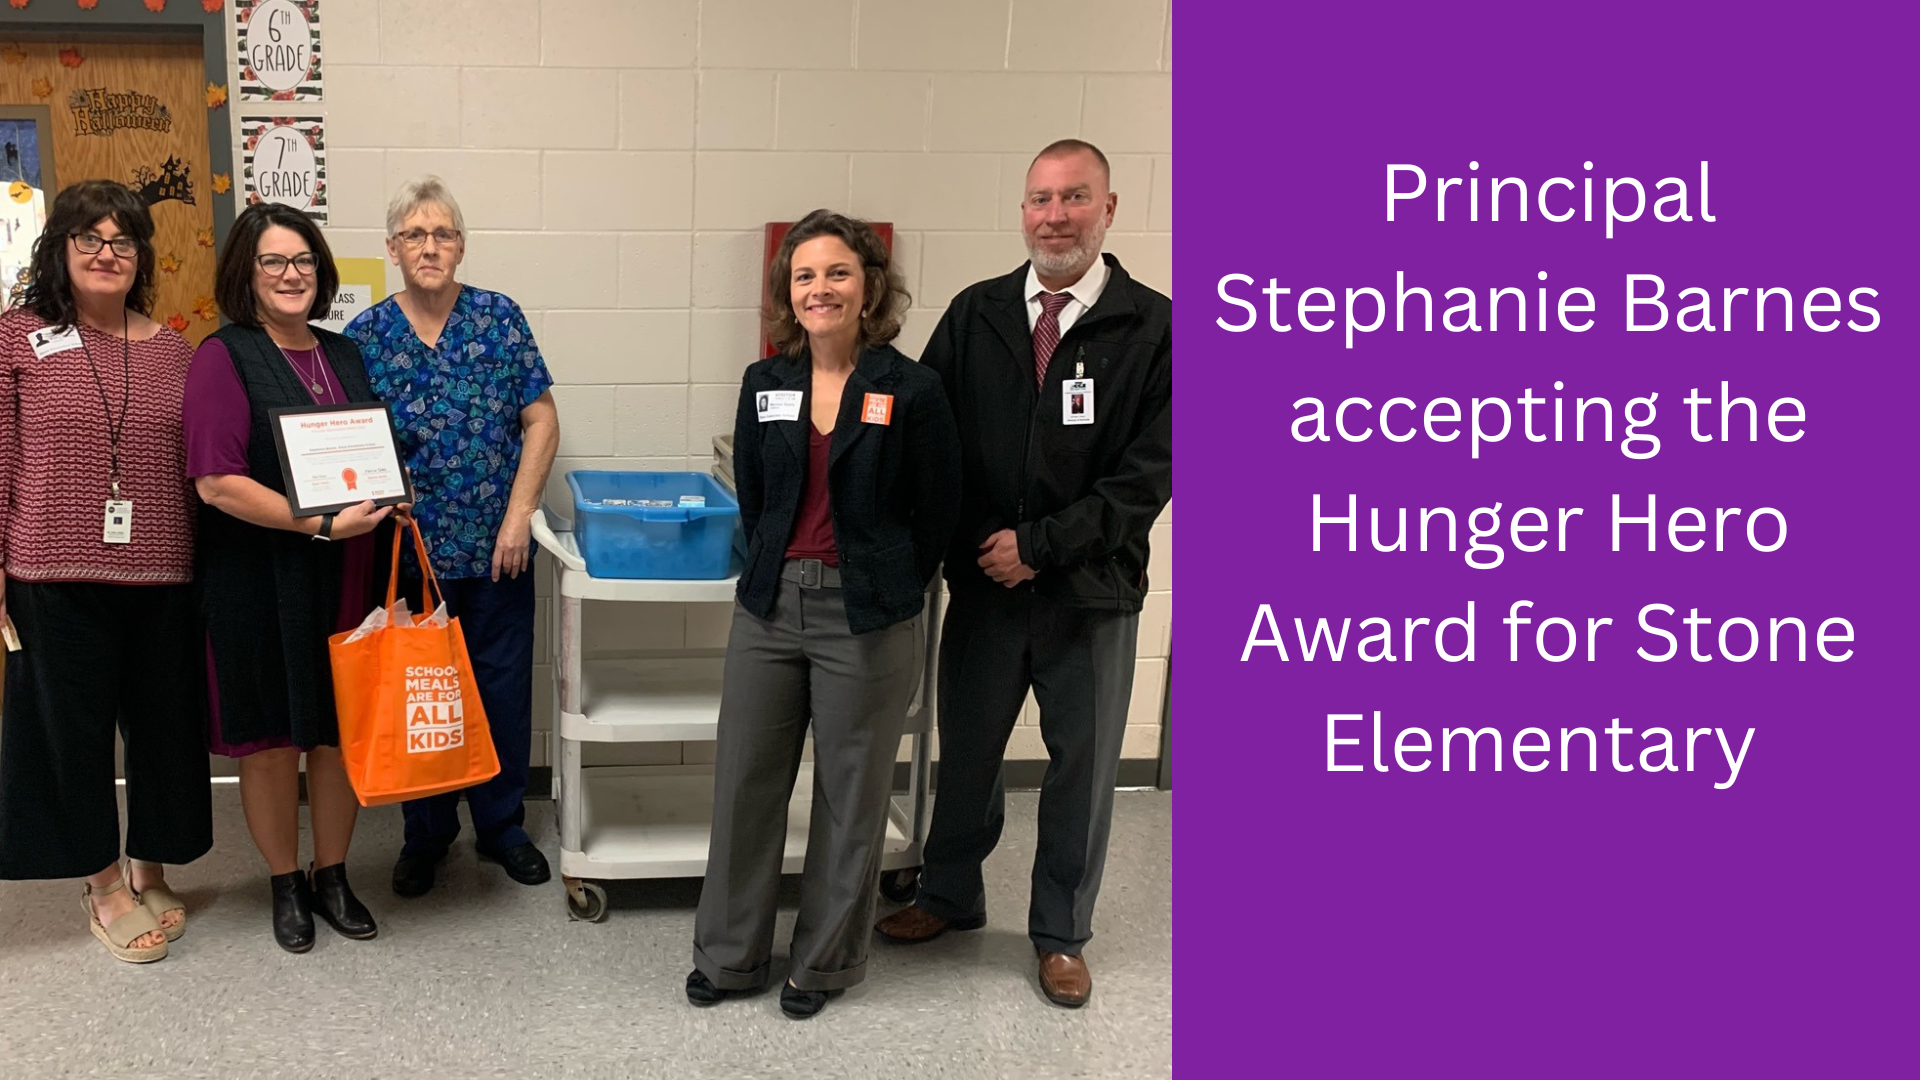 Hunger Hero Award being presented to Principal Stephanie Barnes 